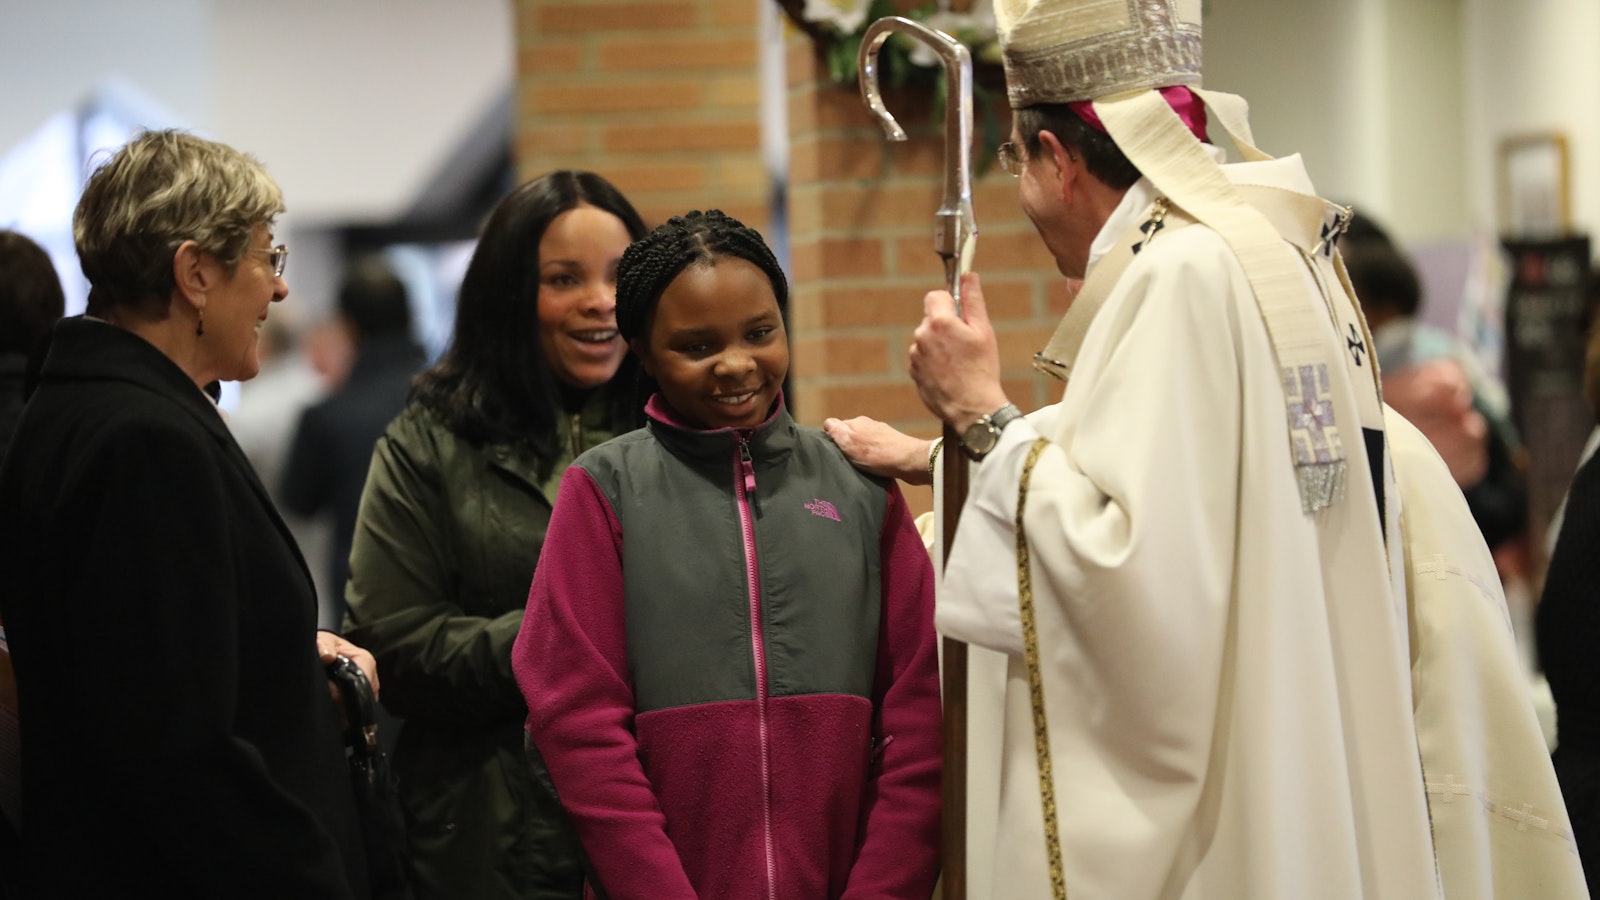 Archbishop Vigneron greets a young parishioner at St. Fabian Parish in Farmington Hills during a visit to the parish April 15, 2018. (Naomi Vrazo | Detroit Catholic file photo)